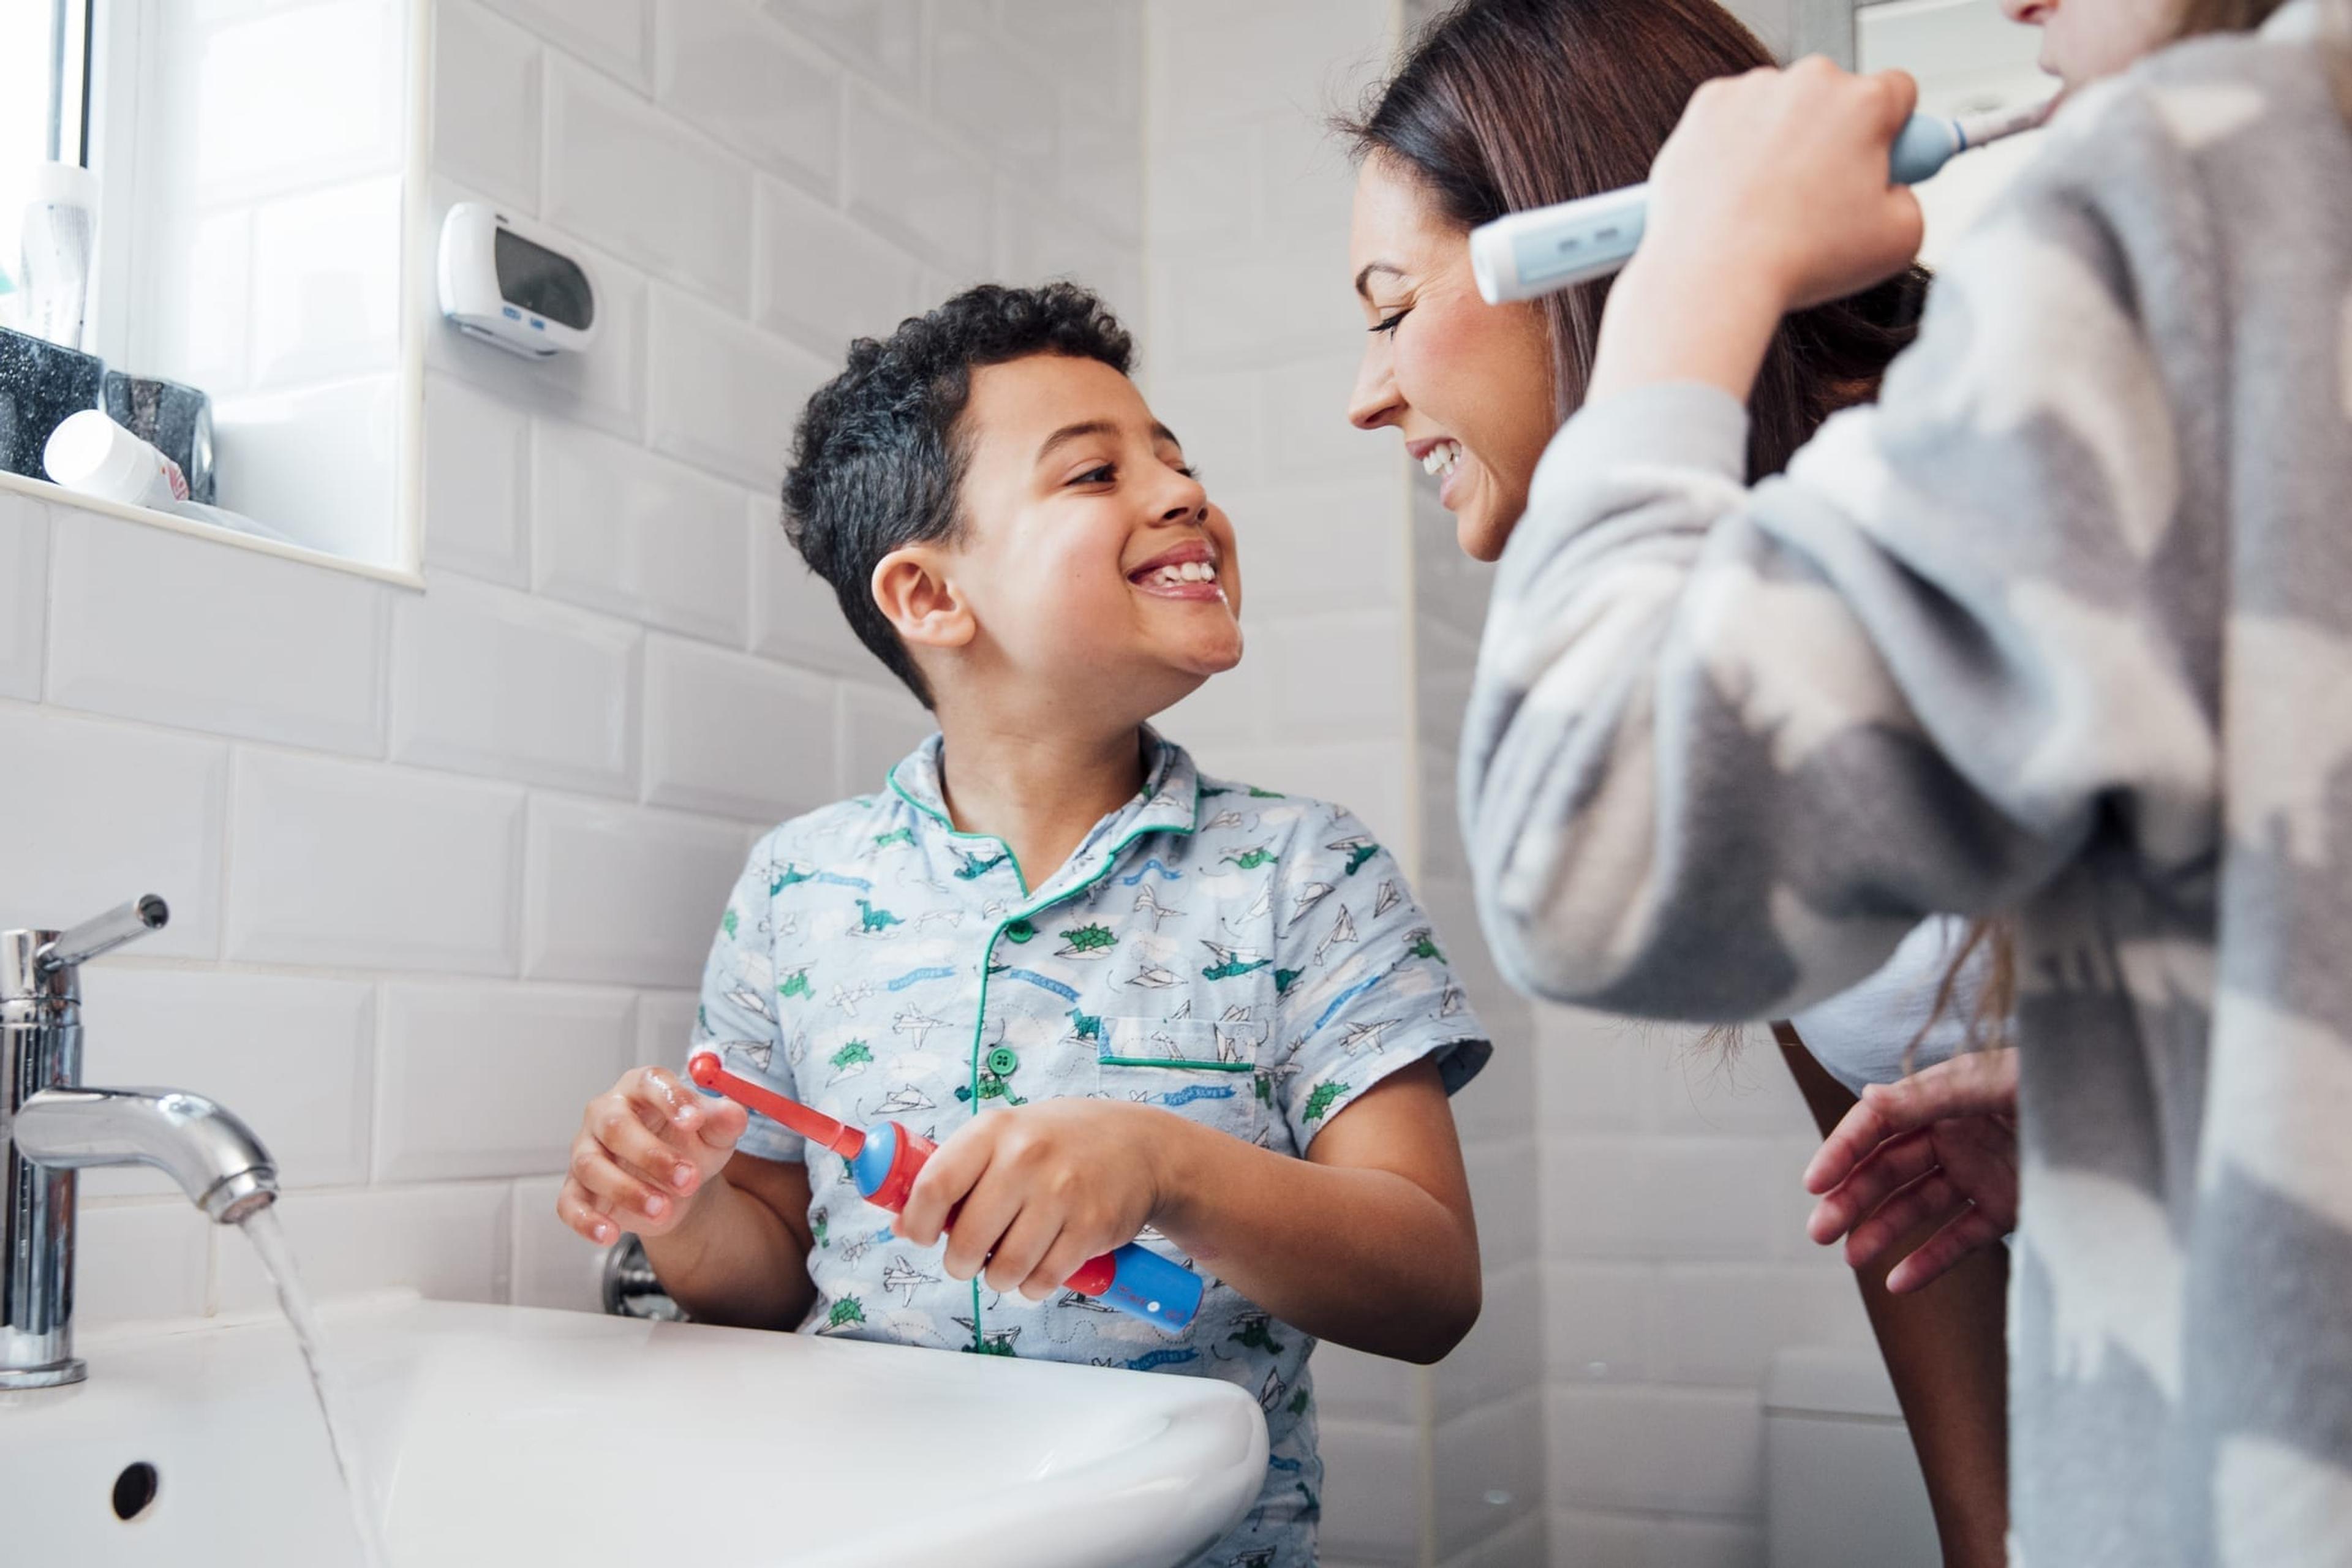 Boy smiling at woman after brushing his teeth